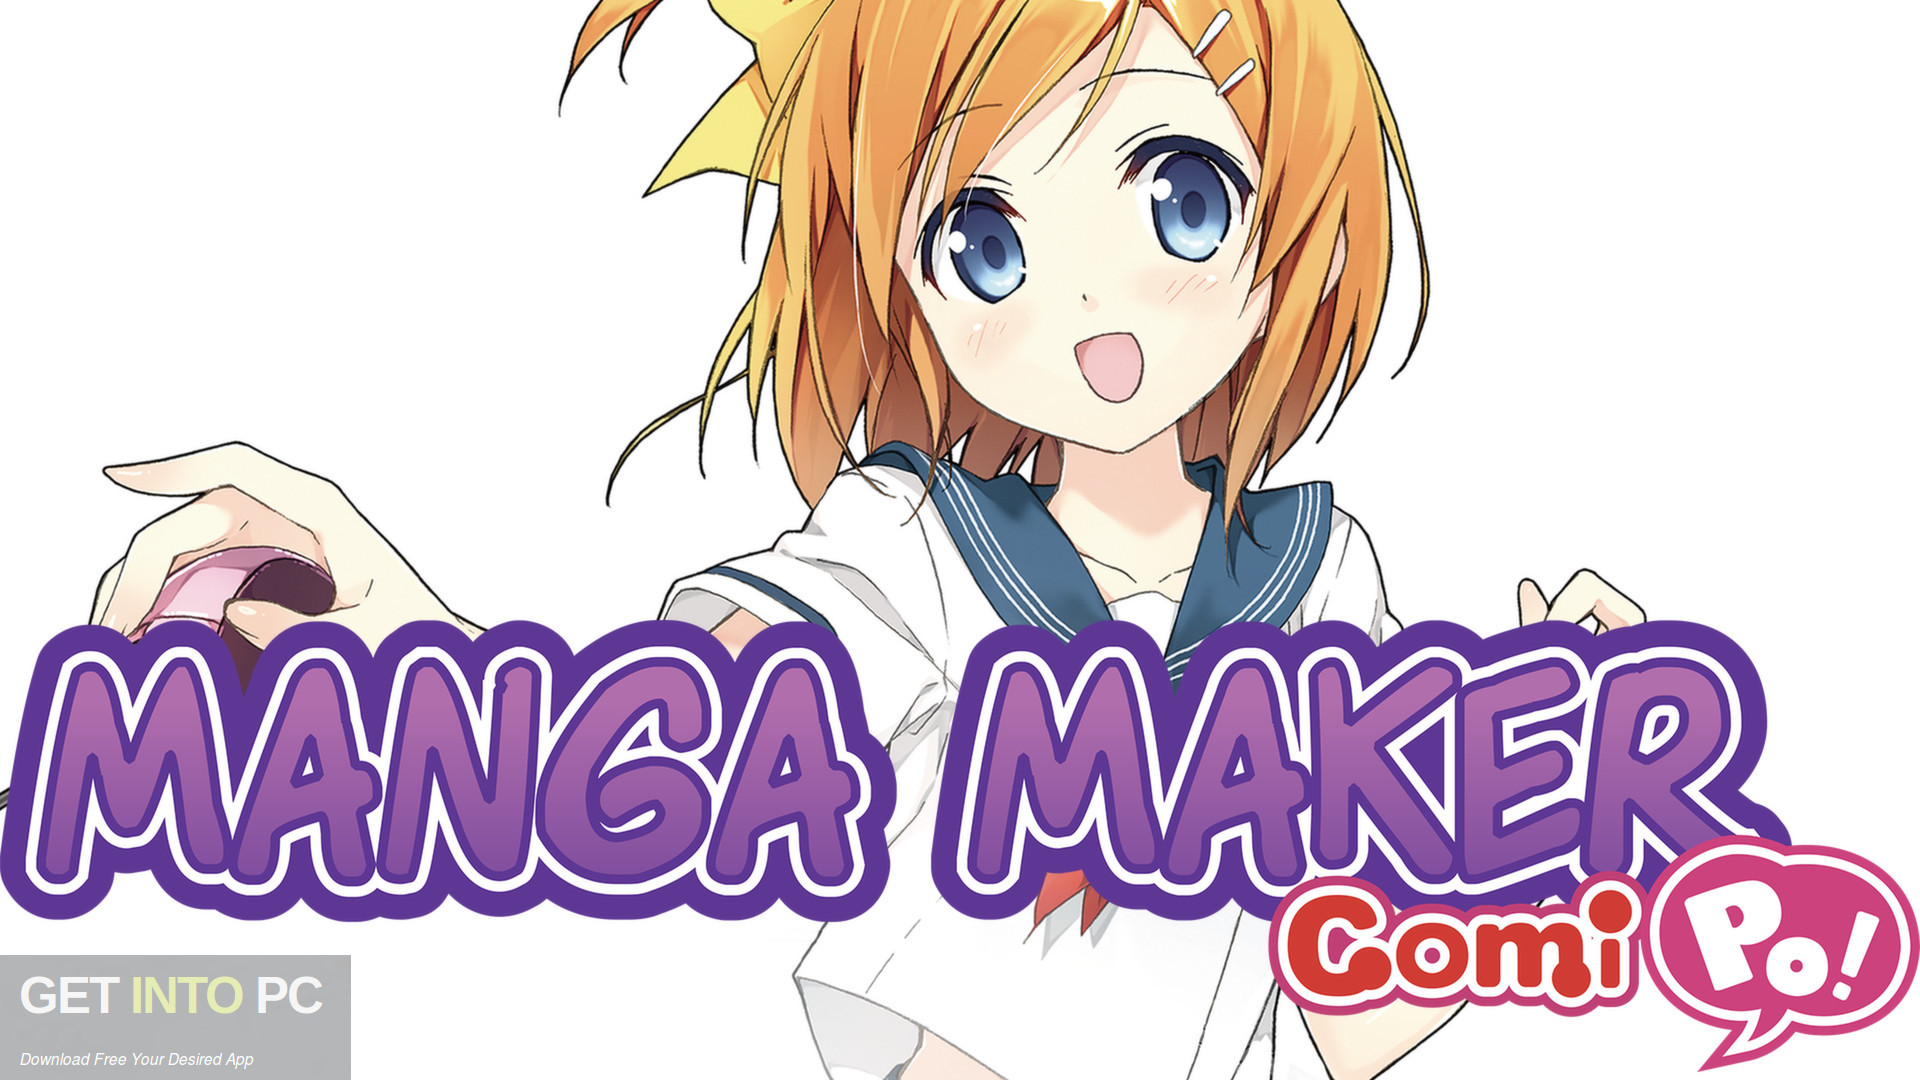 manga maker comipo download